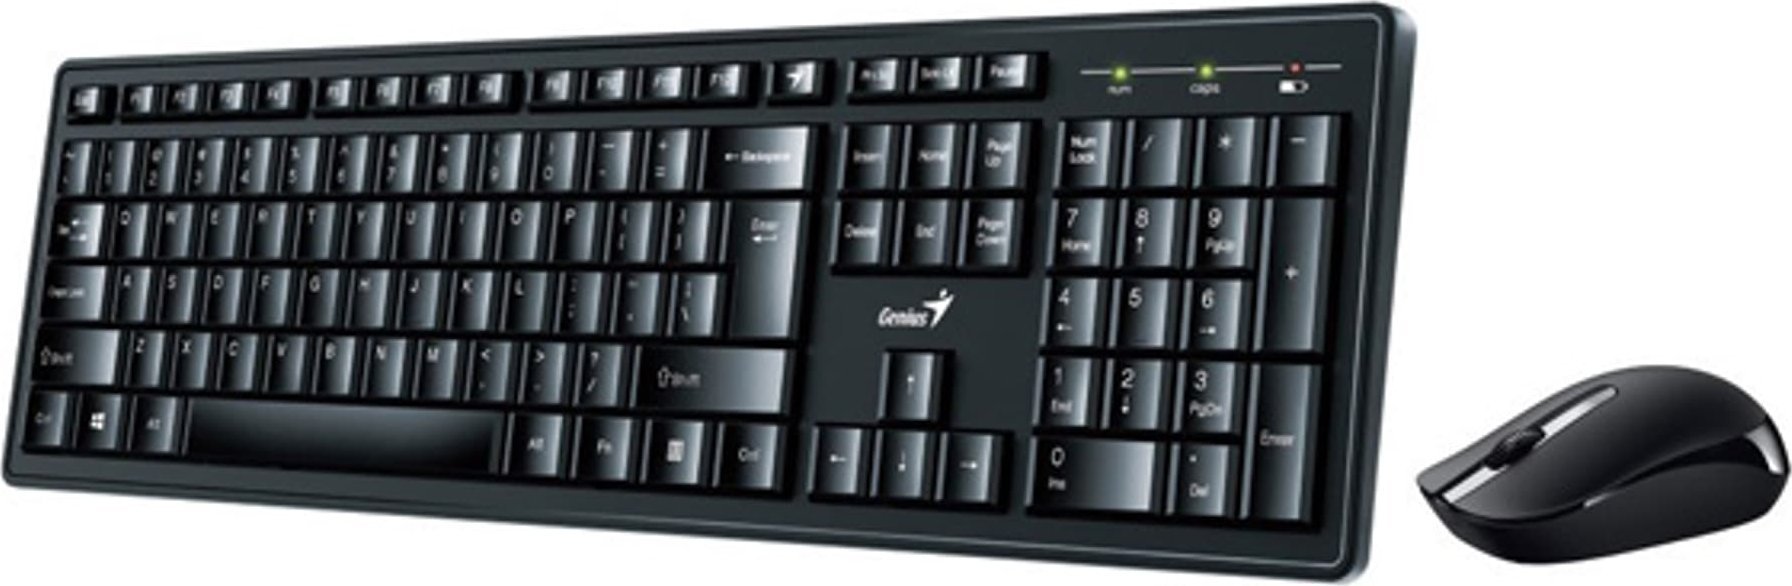 Kit Tastatura + Mouse - Kit tastatura + mouse Genius KM-8200, Negru